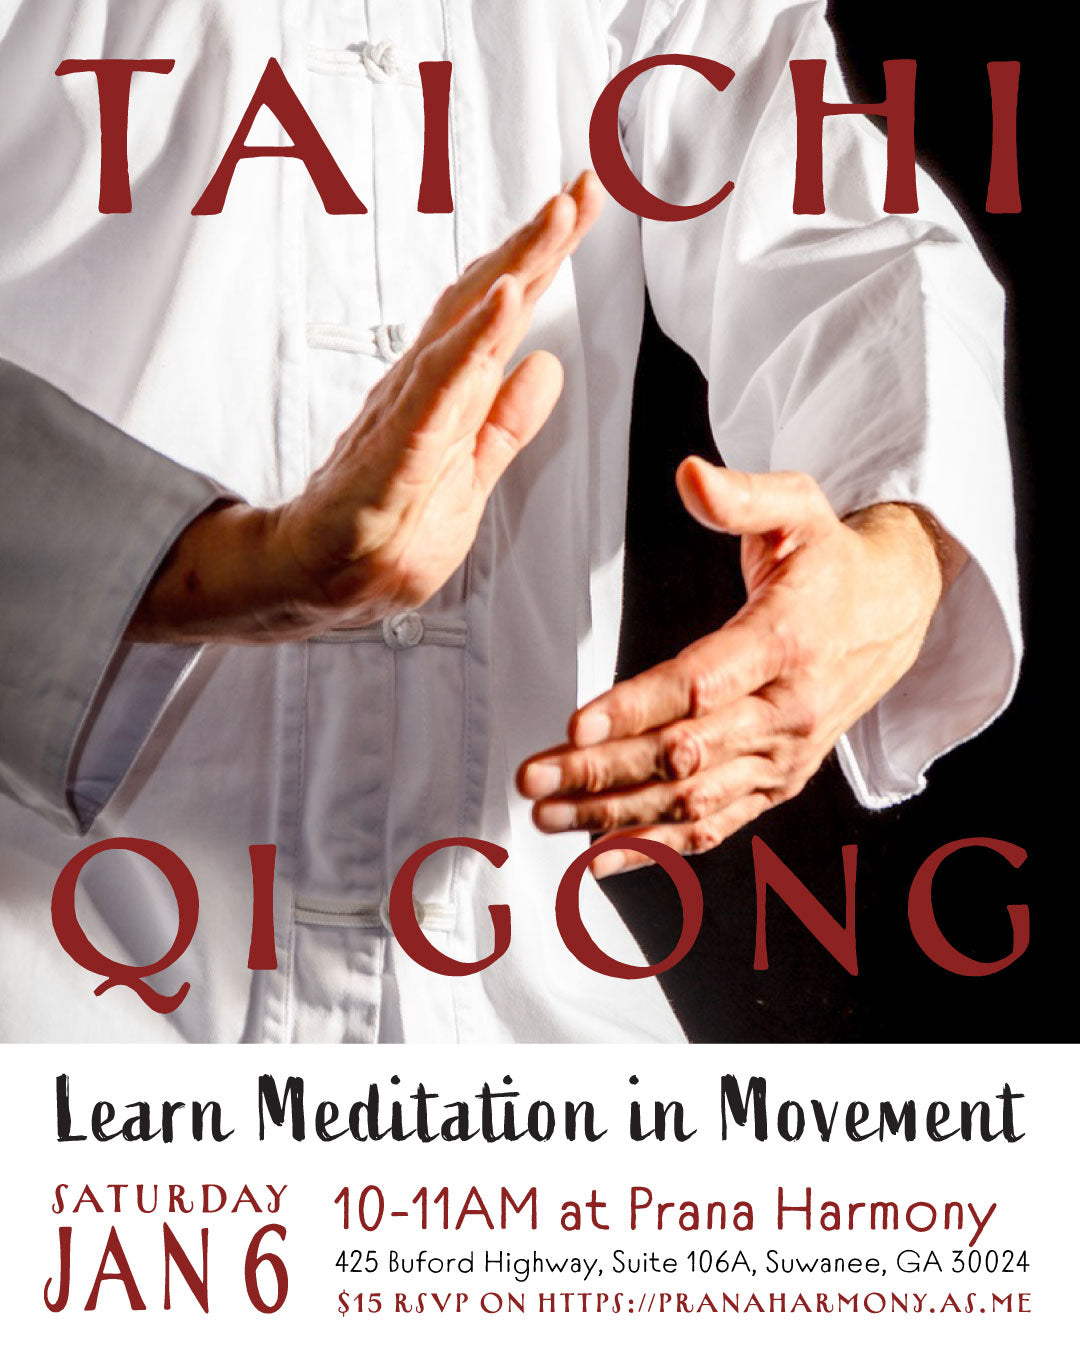 Learn Meditation in Movement with Tai Chi & Qi Gong at Prana Harmony Wellness in Suwanee, GA